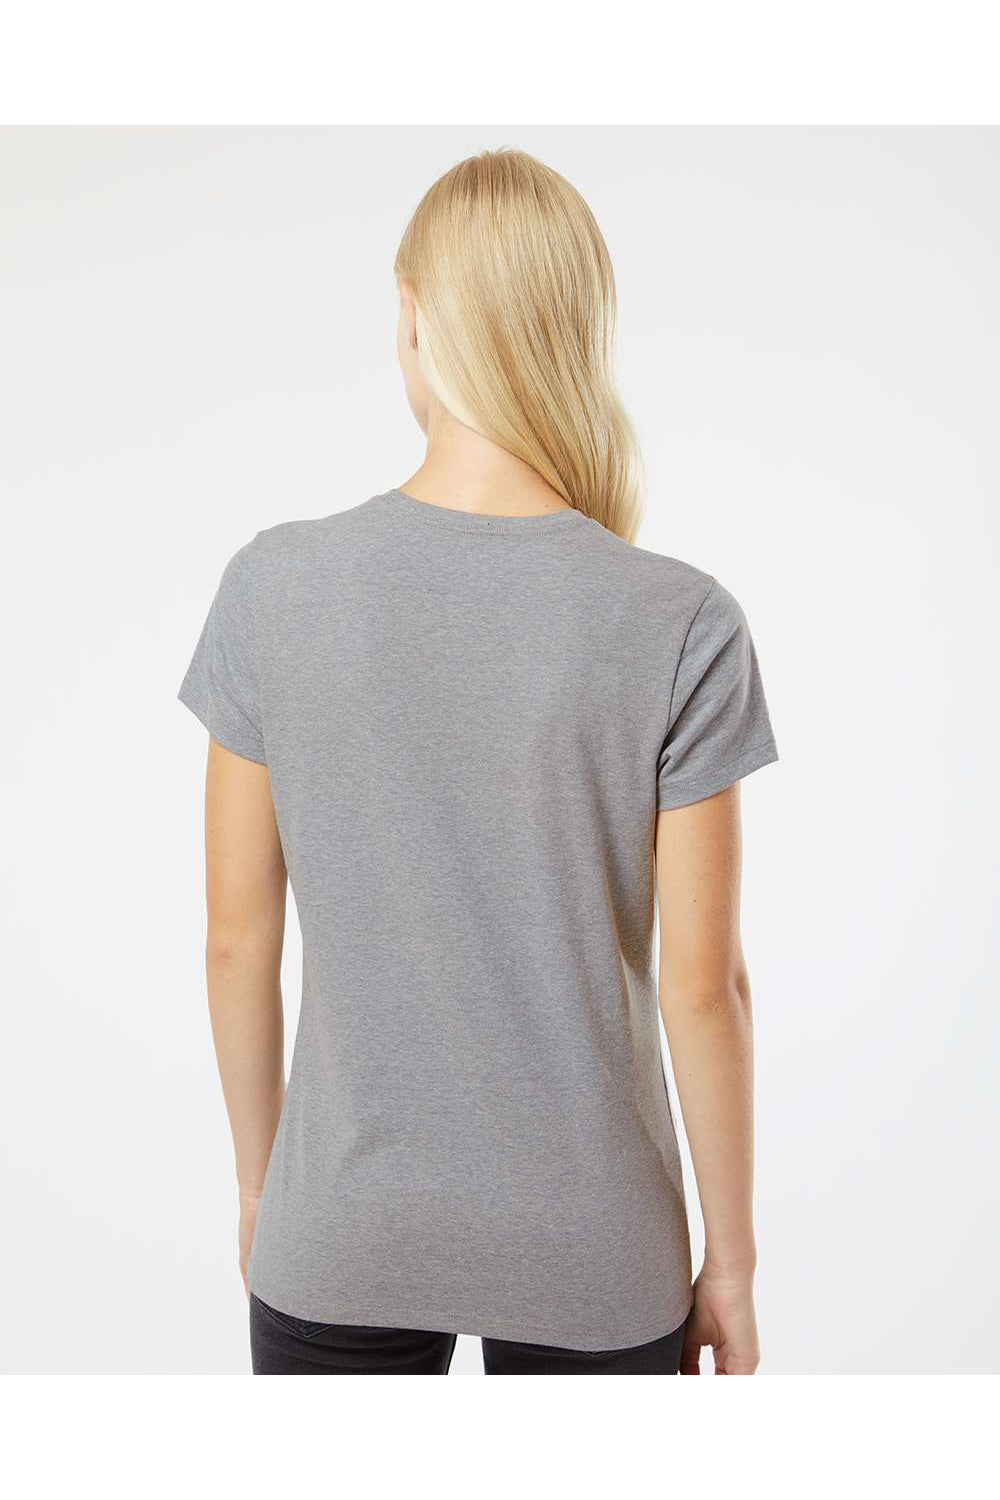 Kastlfel 2021 Womens RecycledSoft Short Sleeve Crewneck T-Shirt Steel Grey Model Back